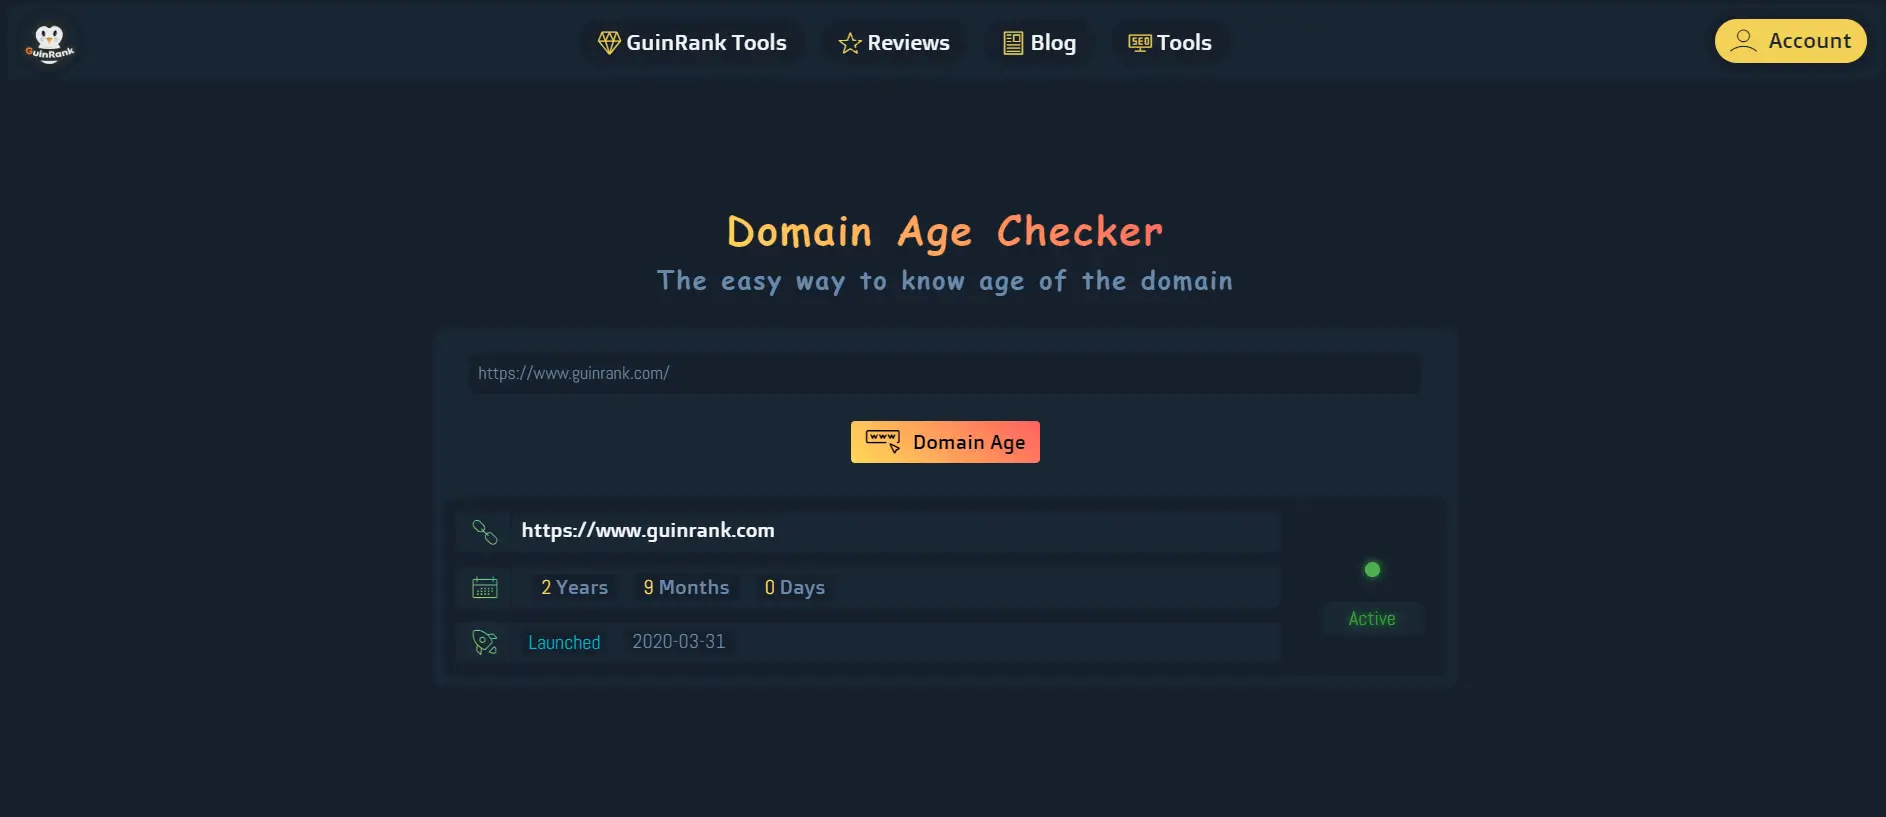  Check Domain Age